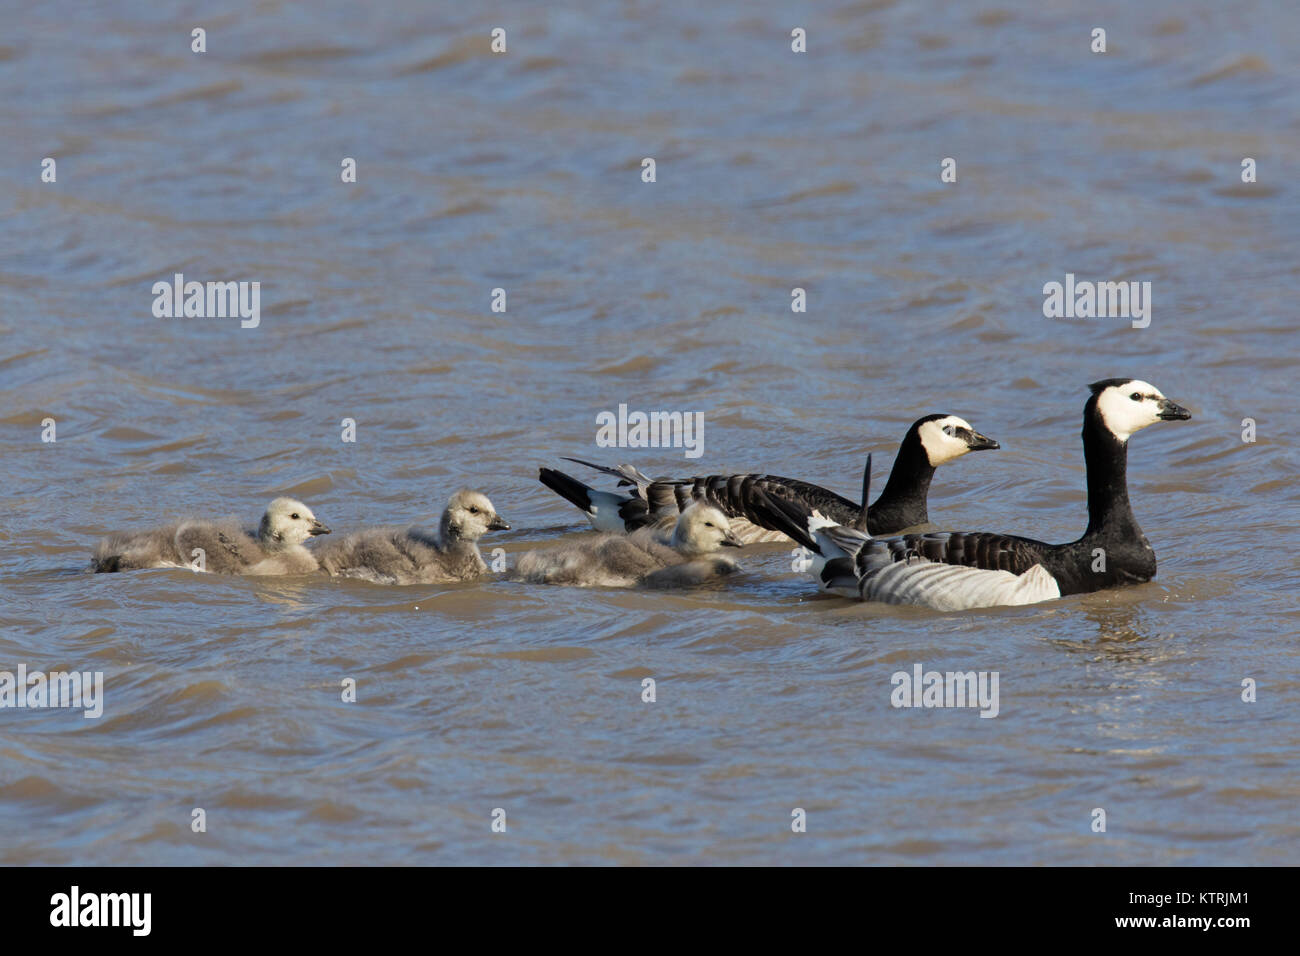 Barnacle goose (Branta leucopsis) coppia con goslings nuotare nel lago in estate Foto Stock